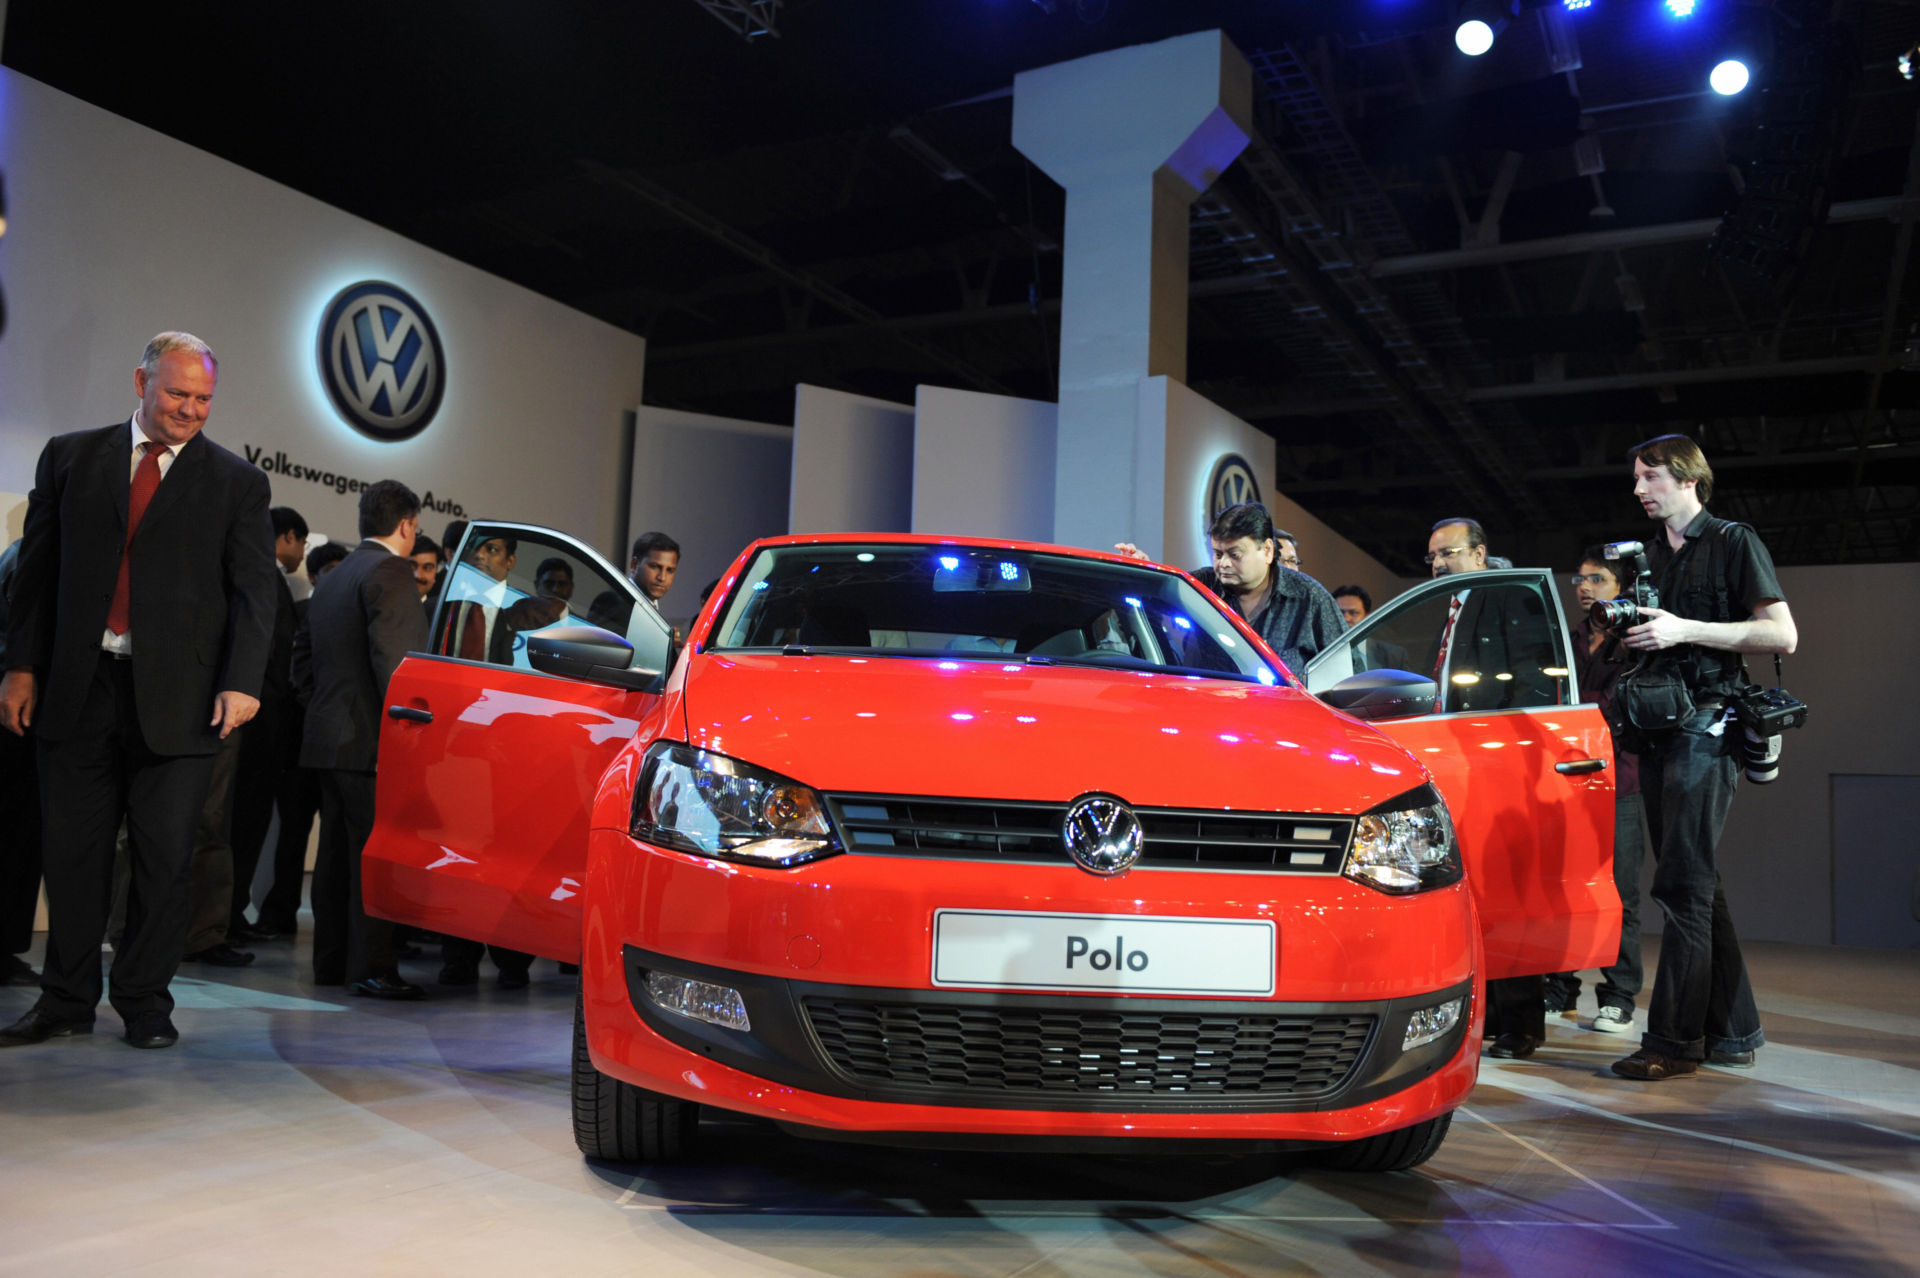 Volkswagen qua mặt Tesla, giới thiệu mẫu xe điện giá rẻ $26,500 XH-volkswagen-xe-dien-re